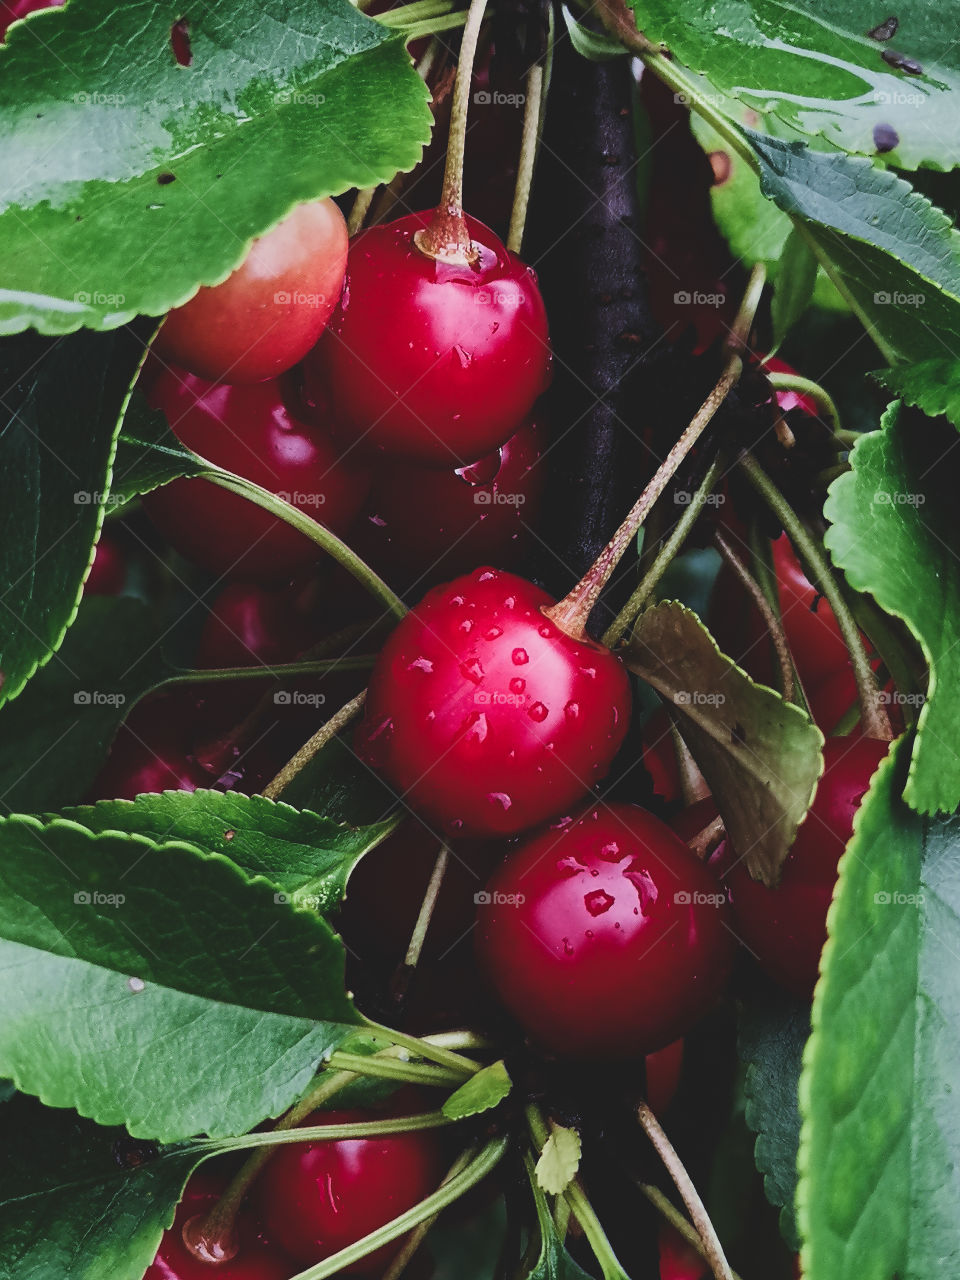 The season of cherries